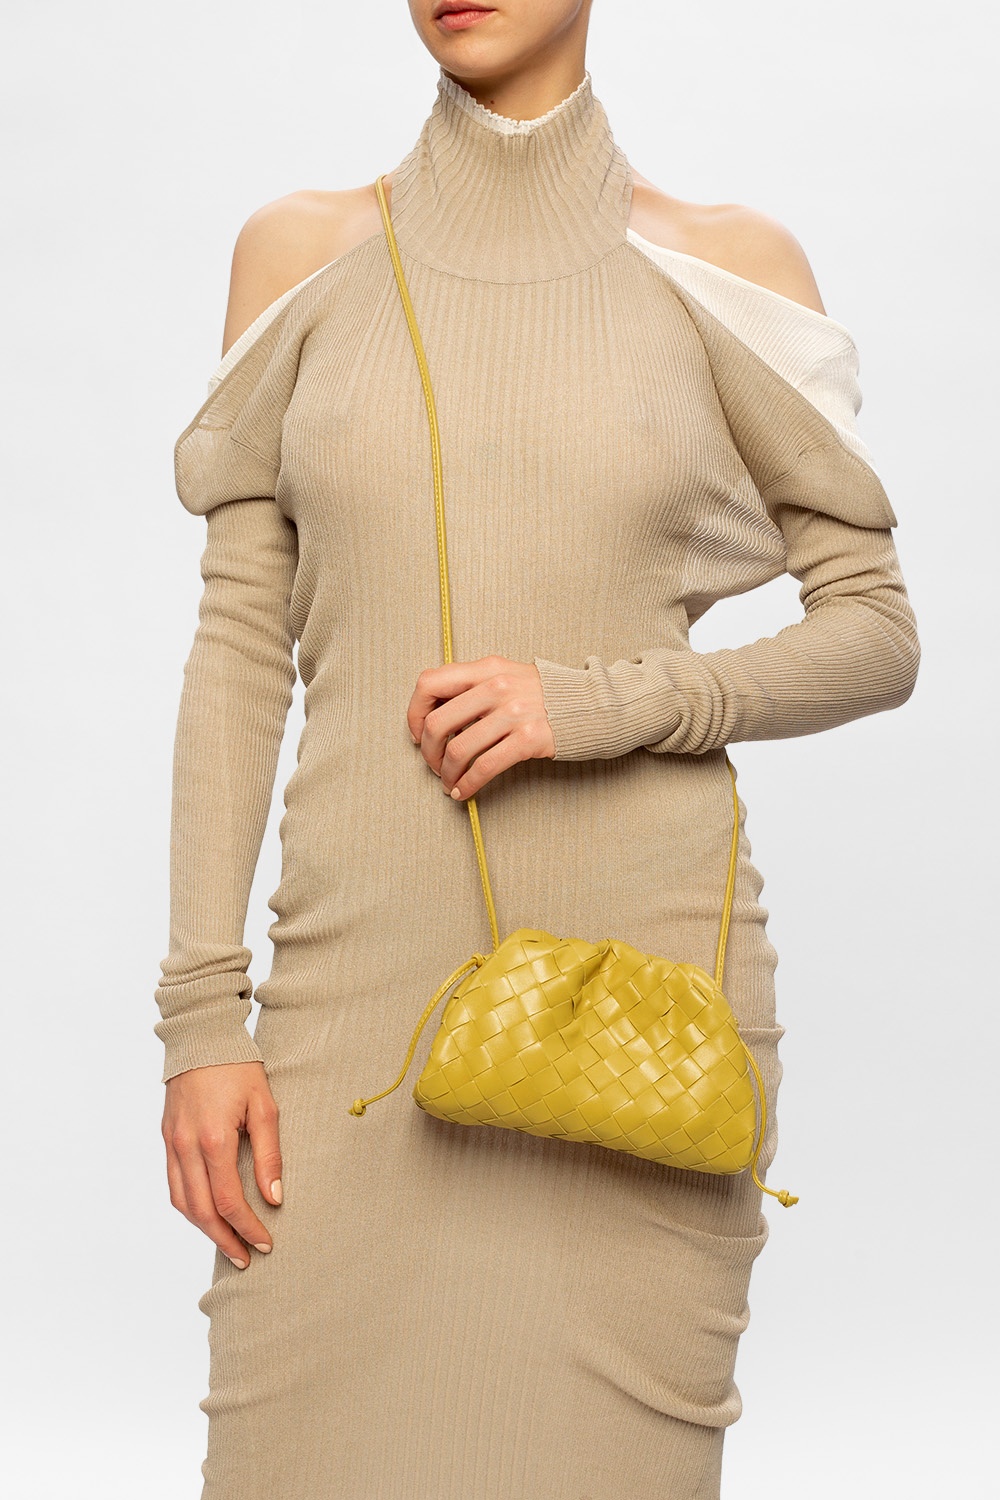 Bottega Veneta Mustard/Gold The Pouch 20 Bag 585852VCP402436 - Handbags -  Jomashop